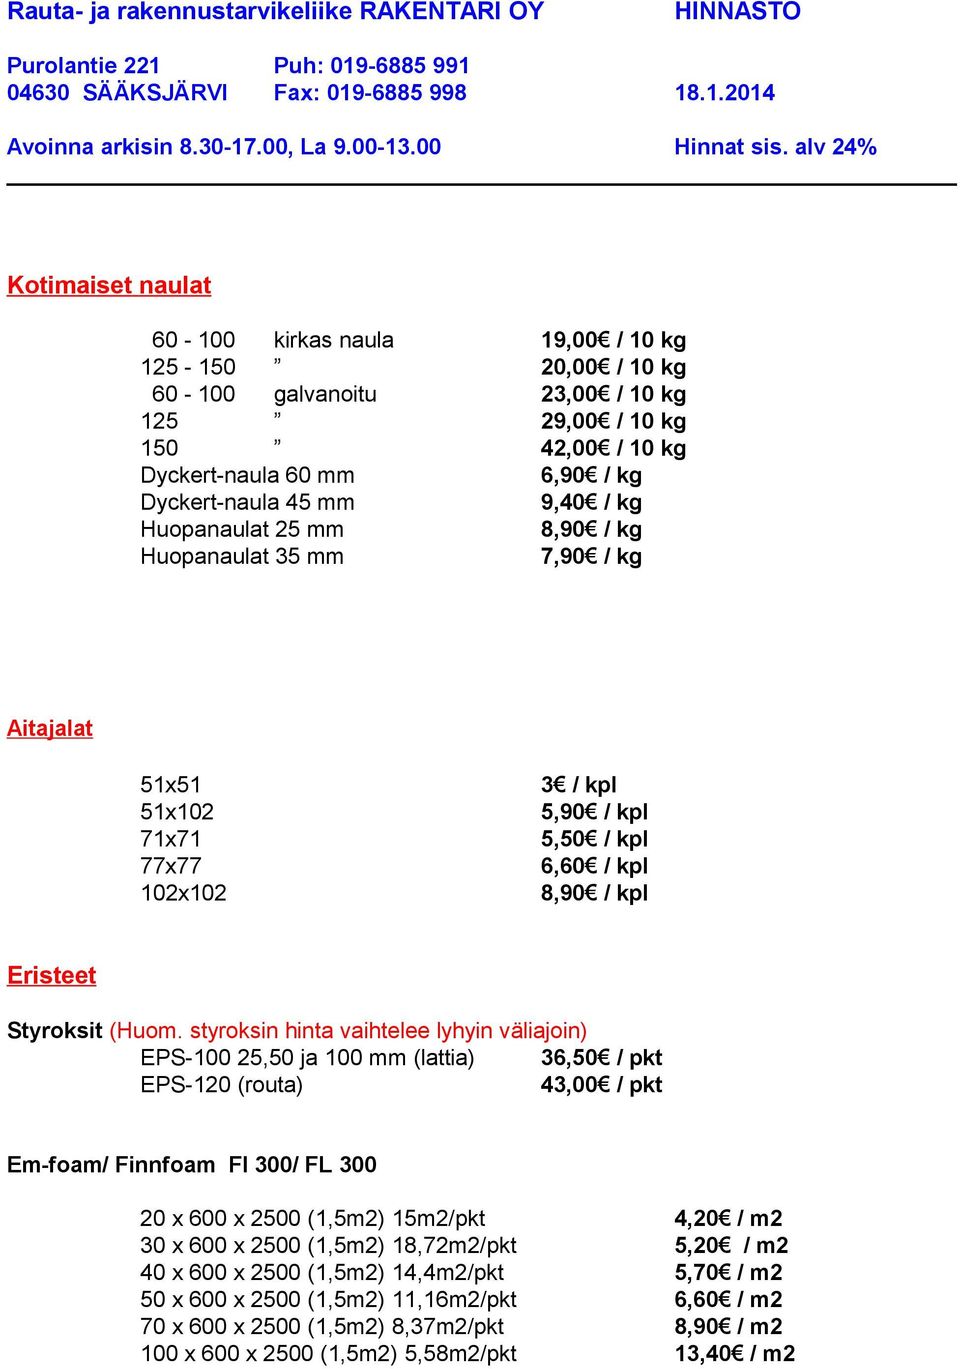 styroksin hinta vaihtelee lyhyin väliajoin) EPS-100 25,50 ja 100 mm (lattia) 36,50 / pkt EPS-120 (routa) 43,00 / pkt Em-foam/ Finnfoam FI 300/ FL 300 20 x 600 x 2500 (1,5m2) 15m2/pkt 4,20 / m2 30 x